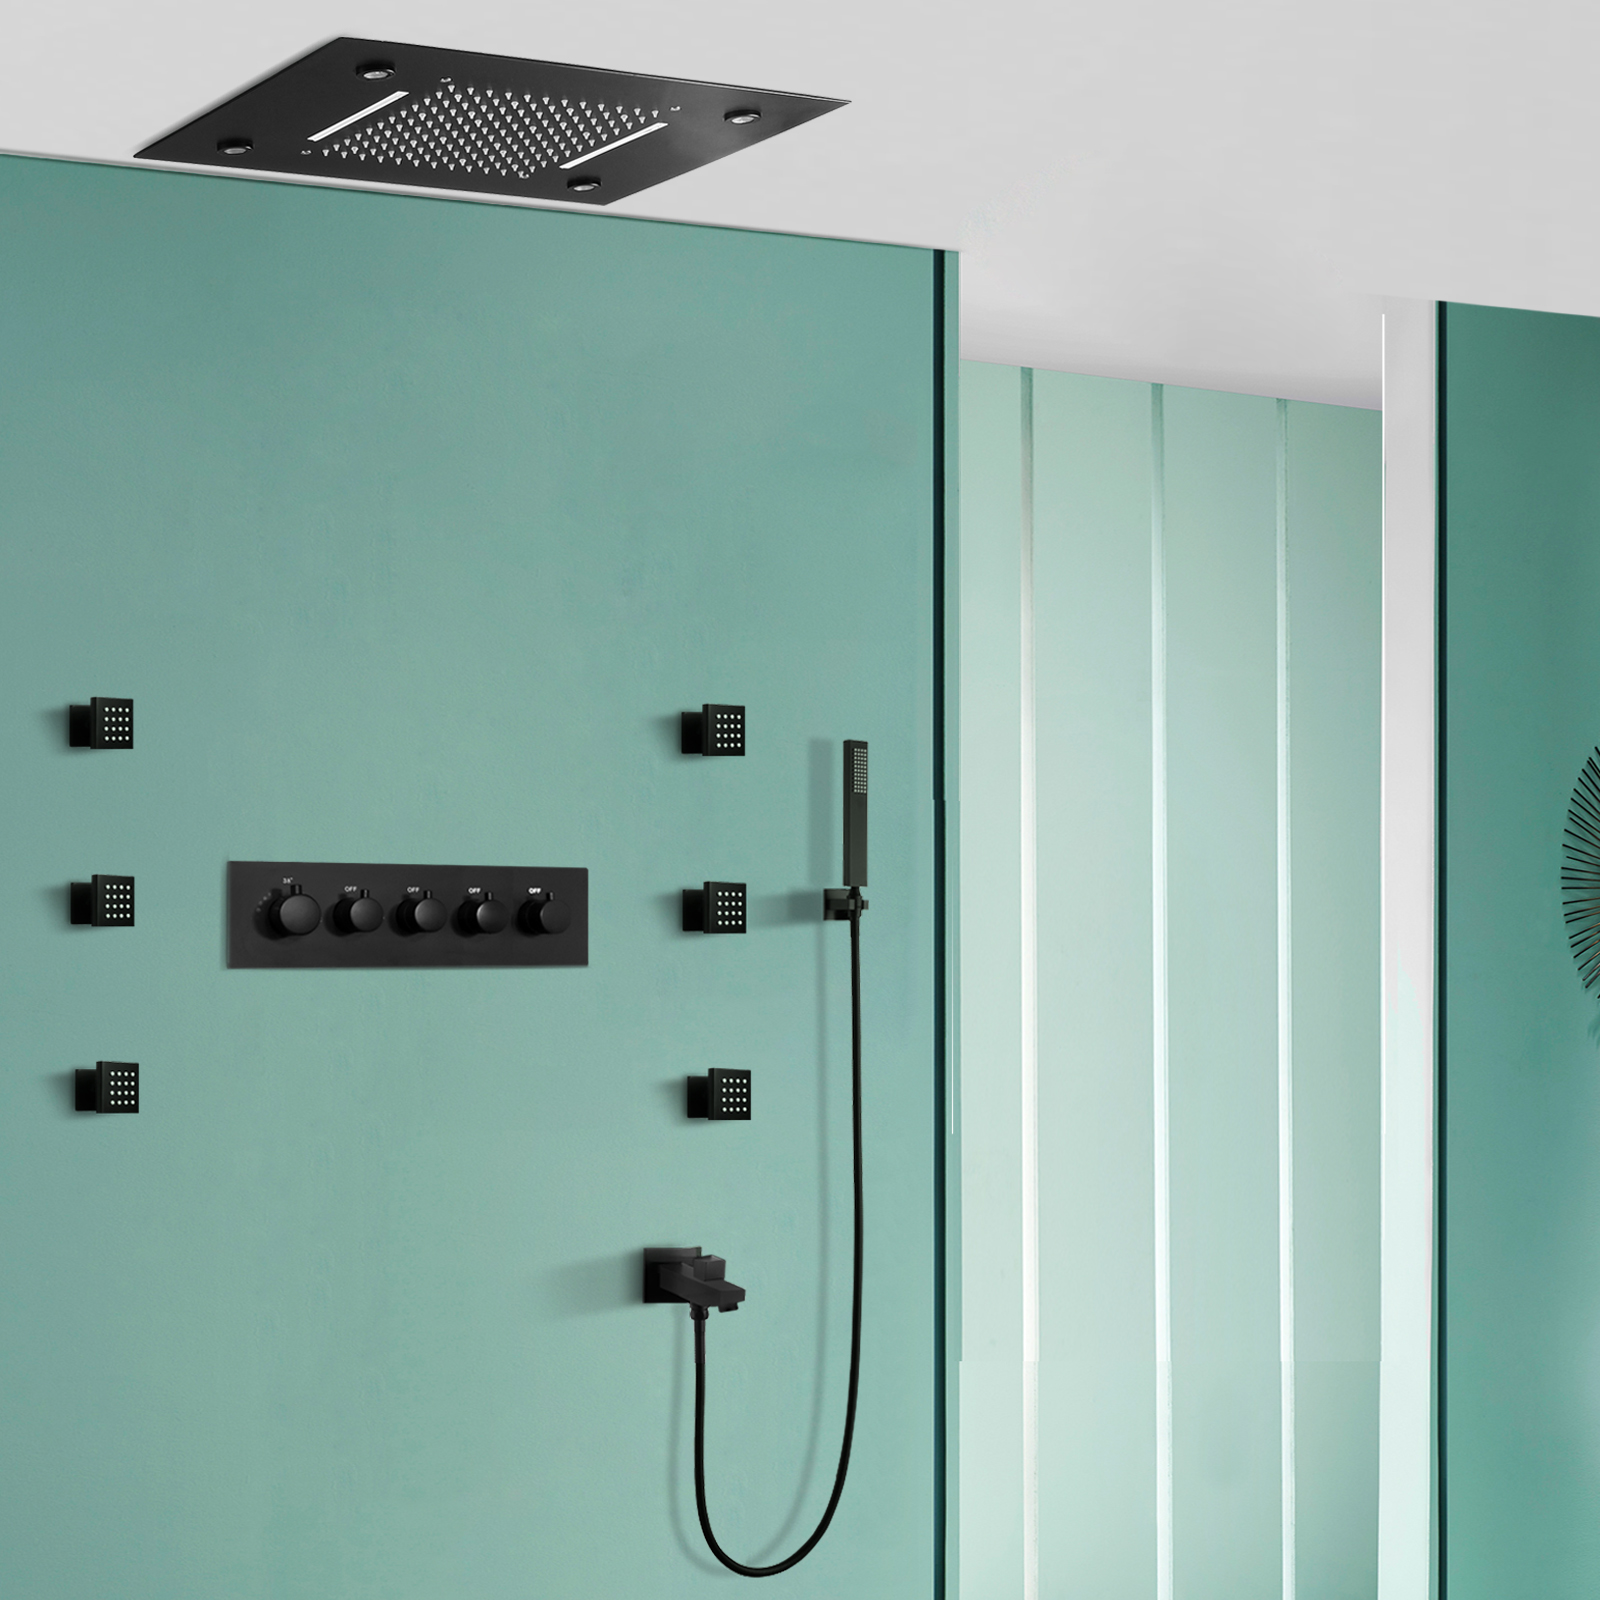 Sistema de ducha para bañera LED negro mate, cabezal de ducha tipo lluvia para baño con juego combinado de mano